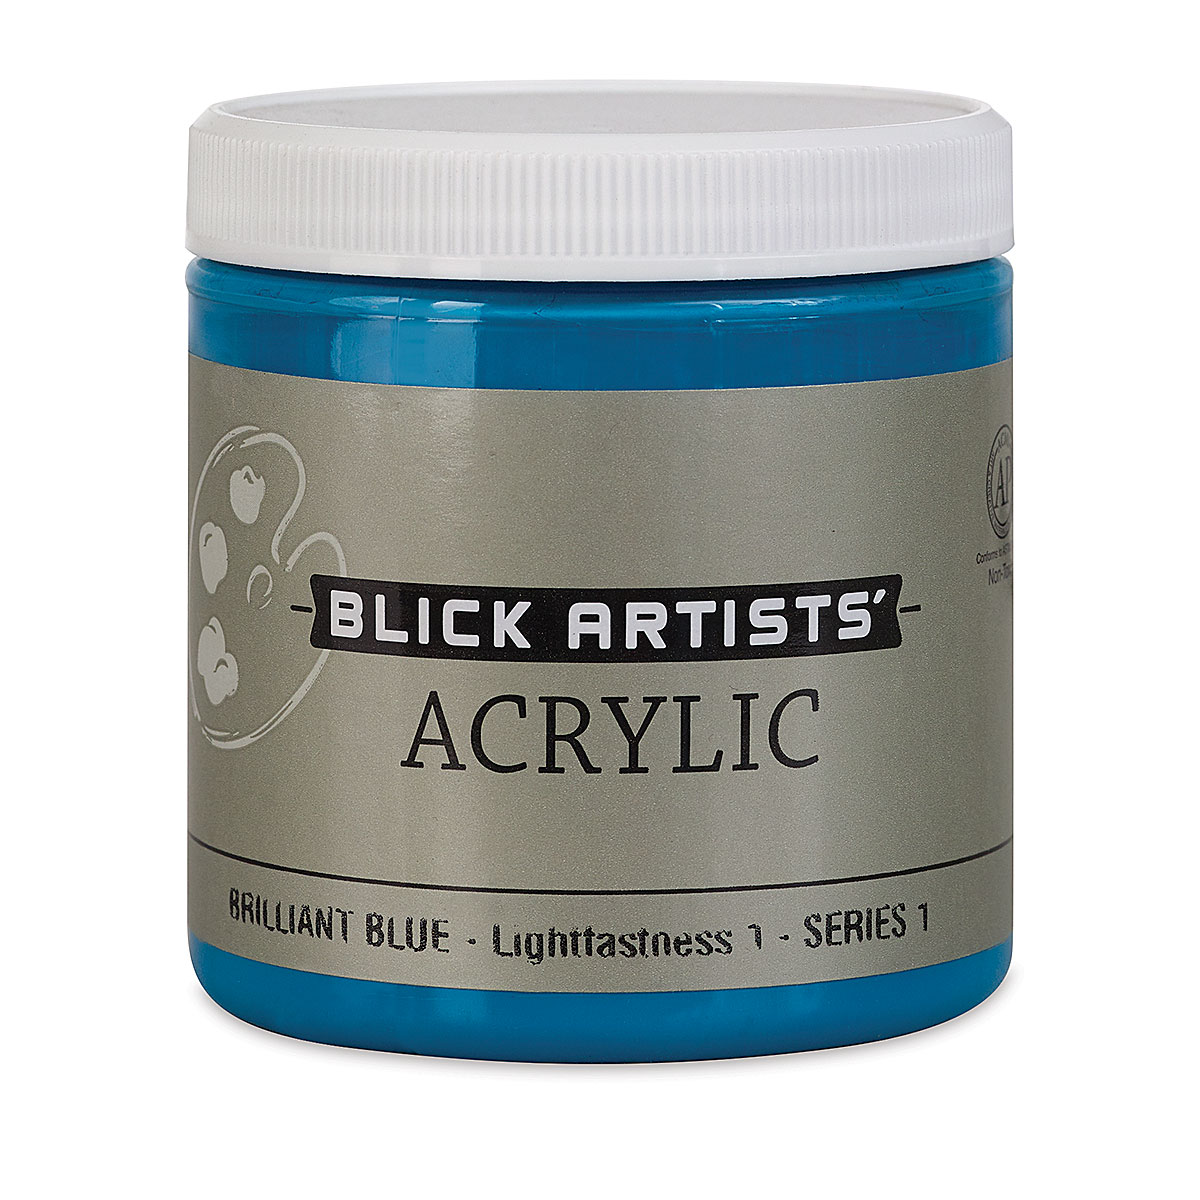 Blick Artists Acrylic Gesso - White, Quart Jar